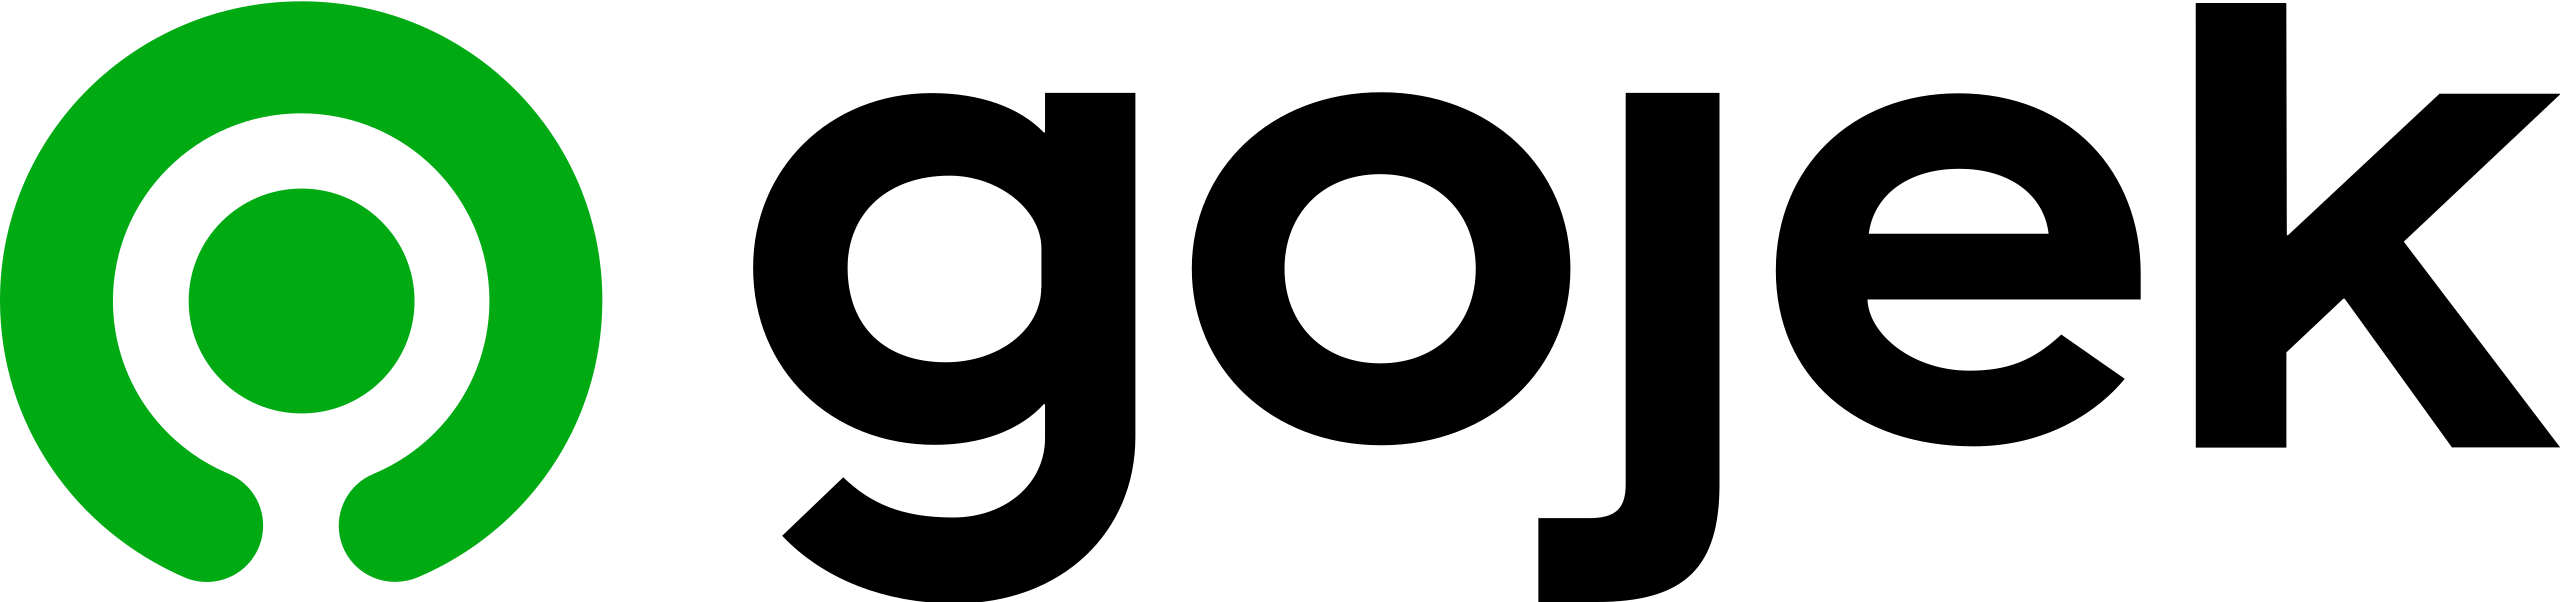 Gojek Logo - File:Gojek logo 2019.svg - Wikimedia ...